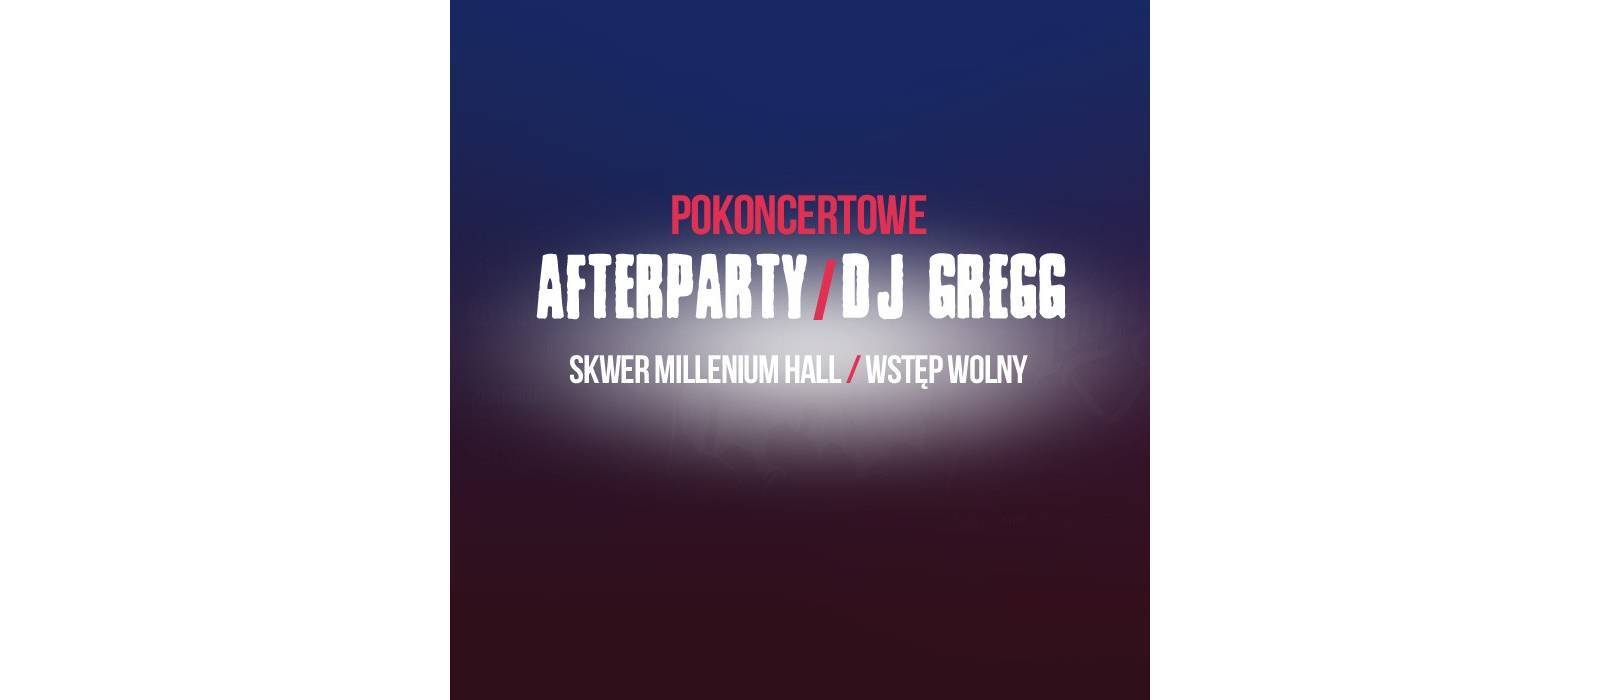 Pokoncertowe afterparty z DJ Gregg - 1